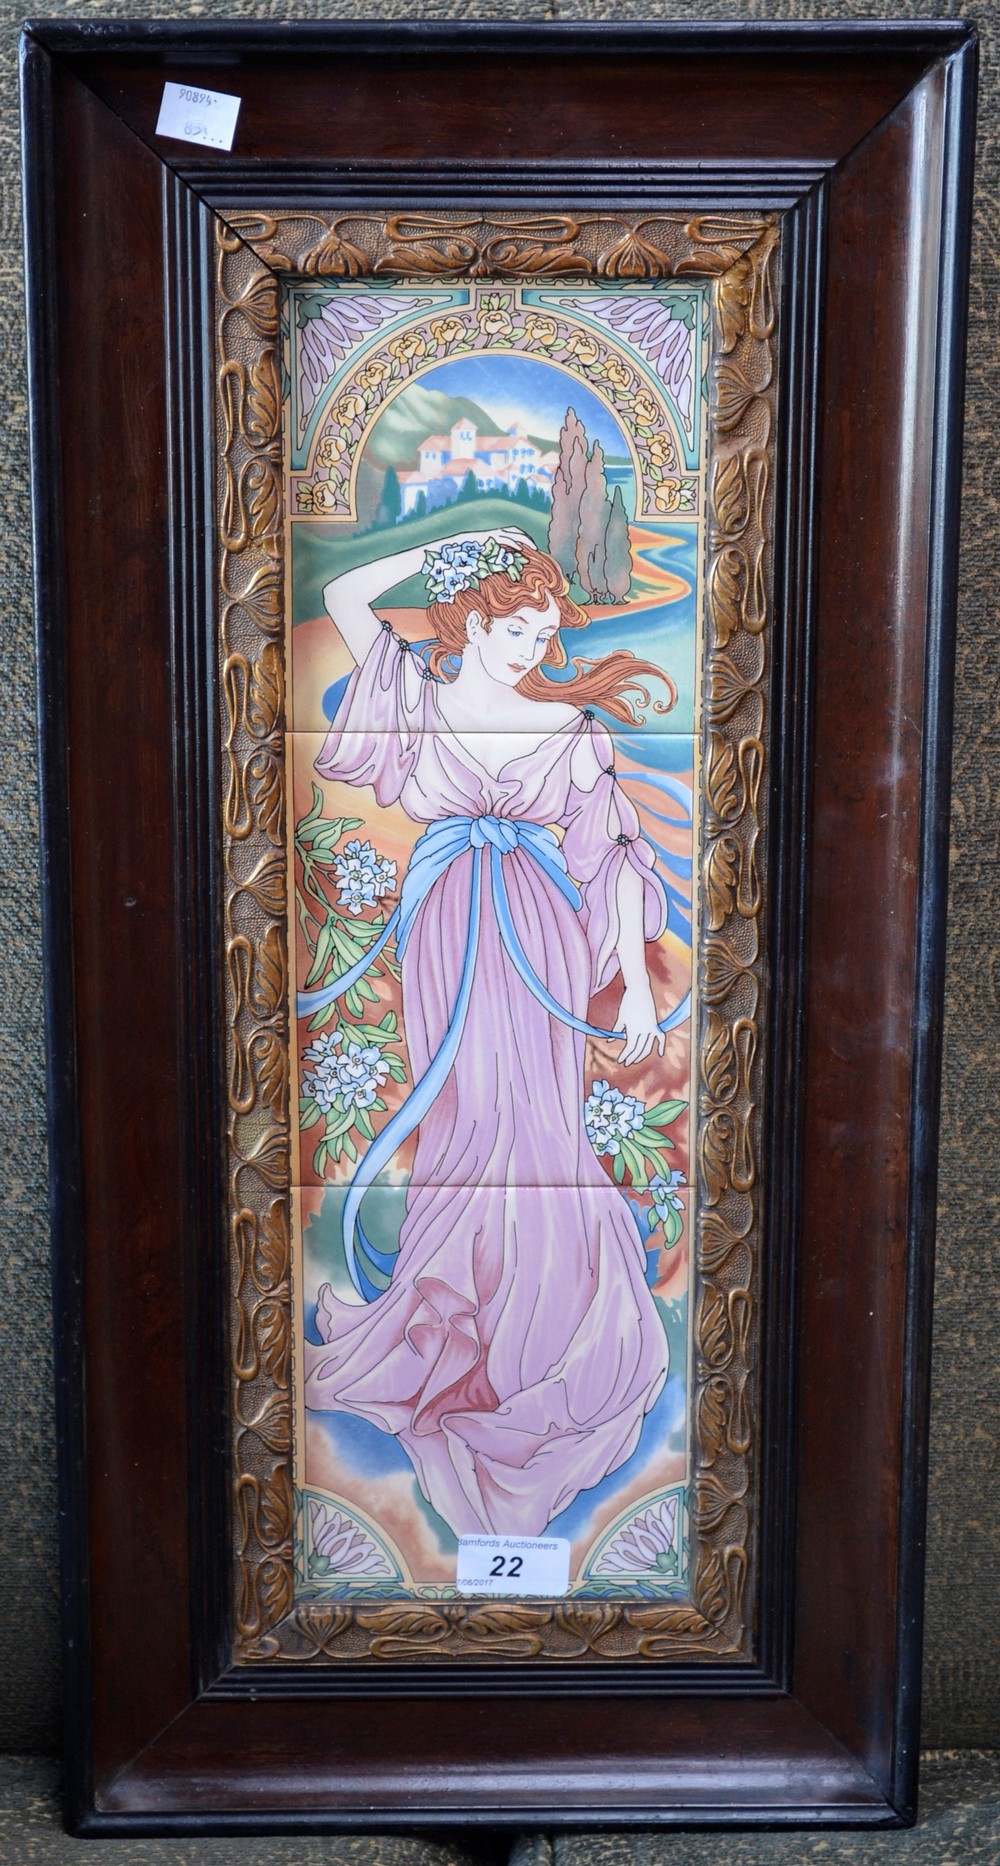 A framed set of Art Nouveau style tiles